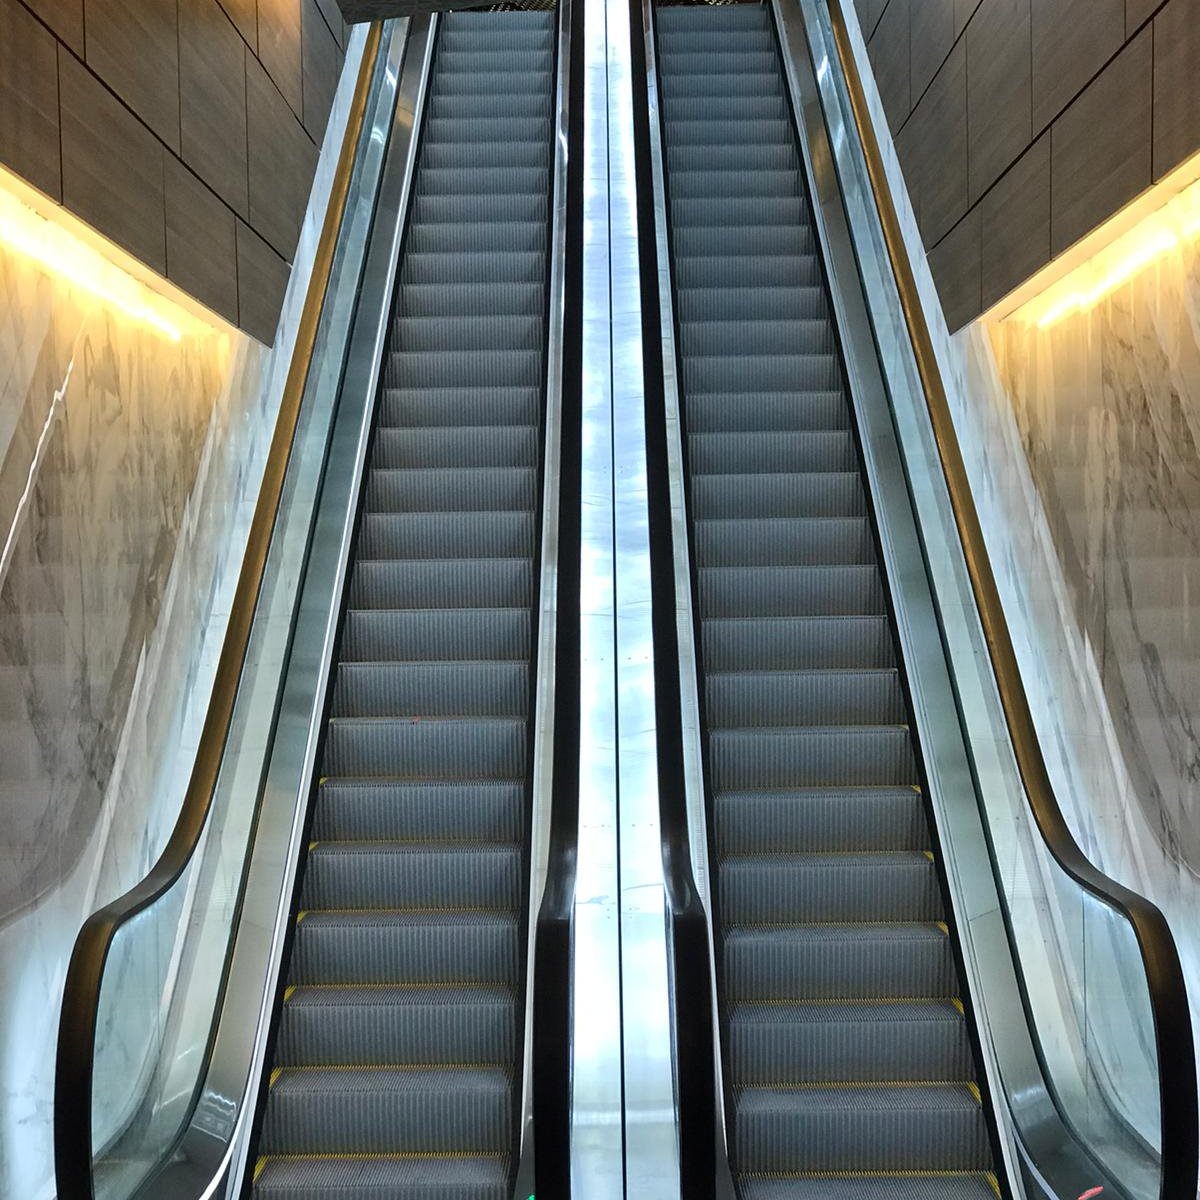  Commercial Escalators | Simplex Elevators Gallery Image 2